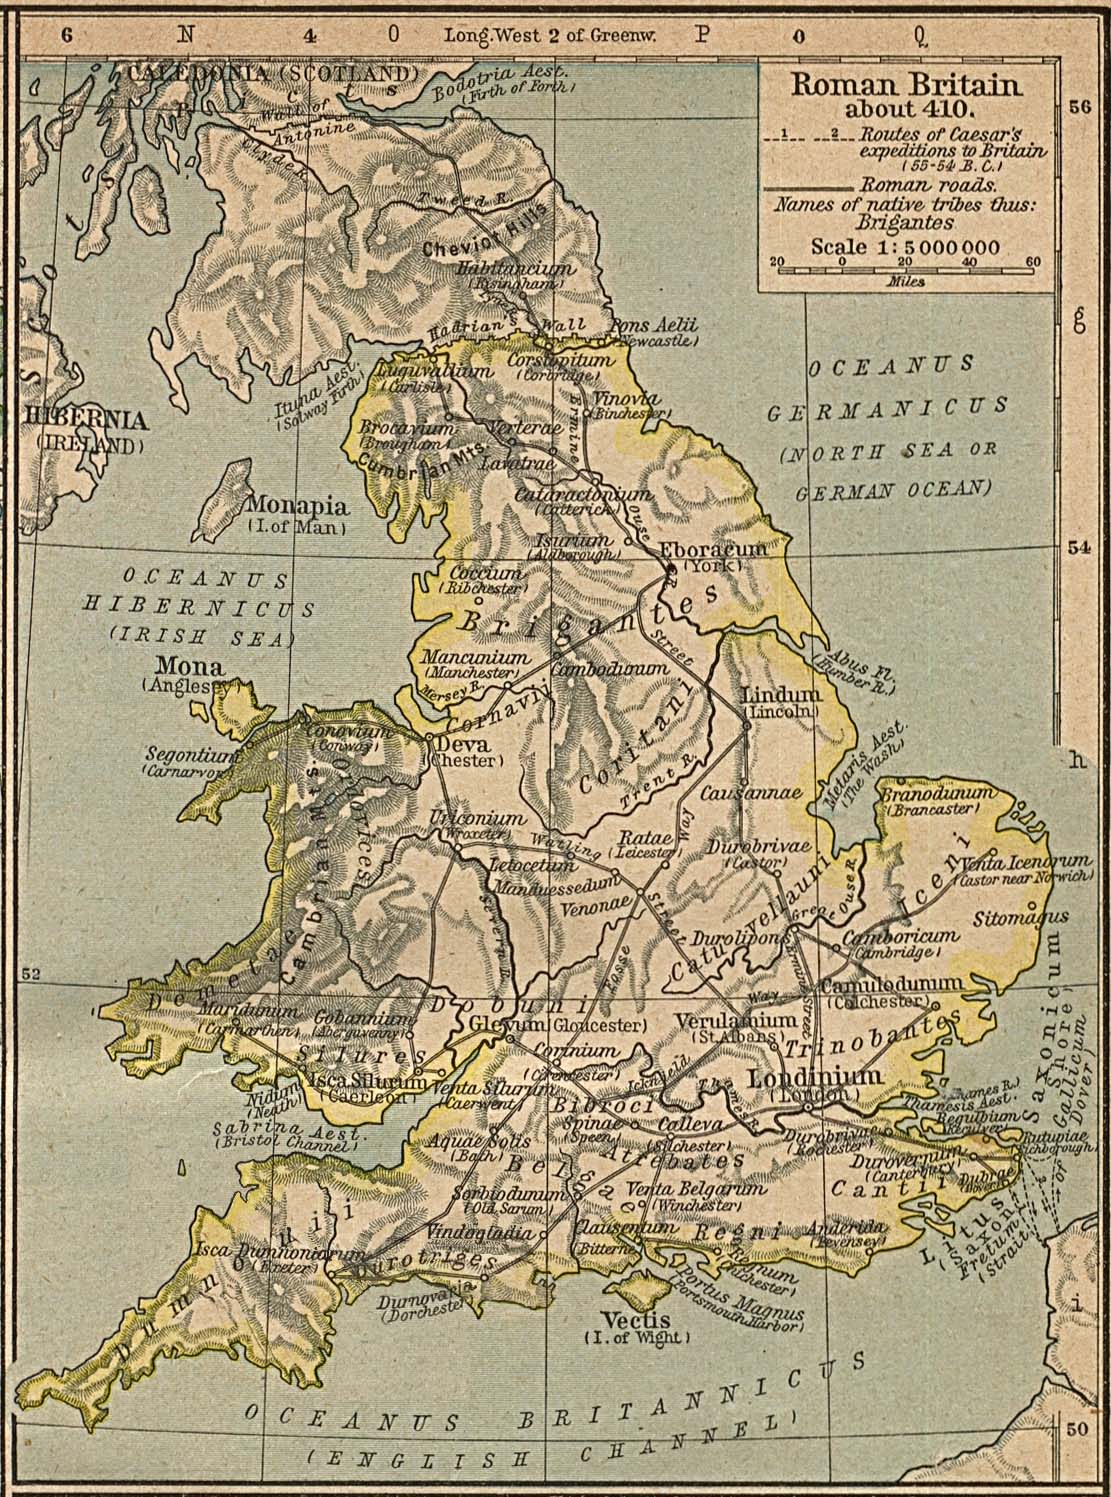 Mapa de Britania (Provincia Romana) Circa 410